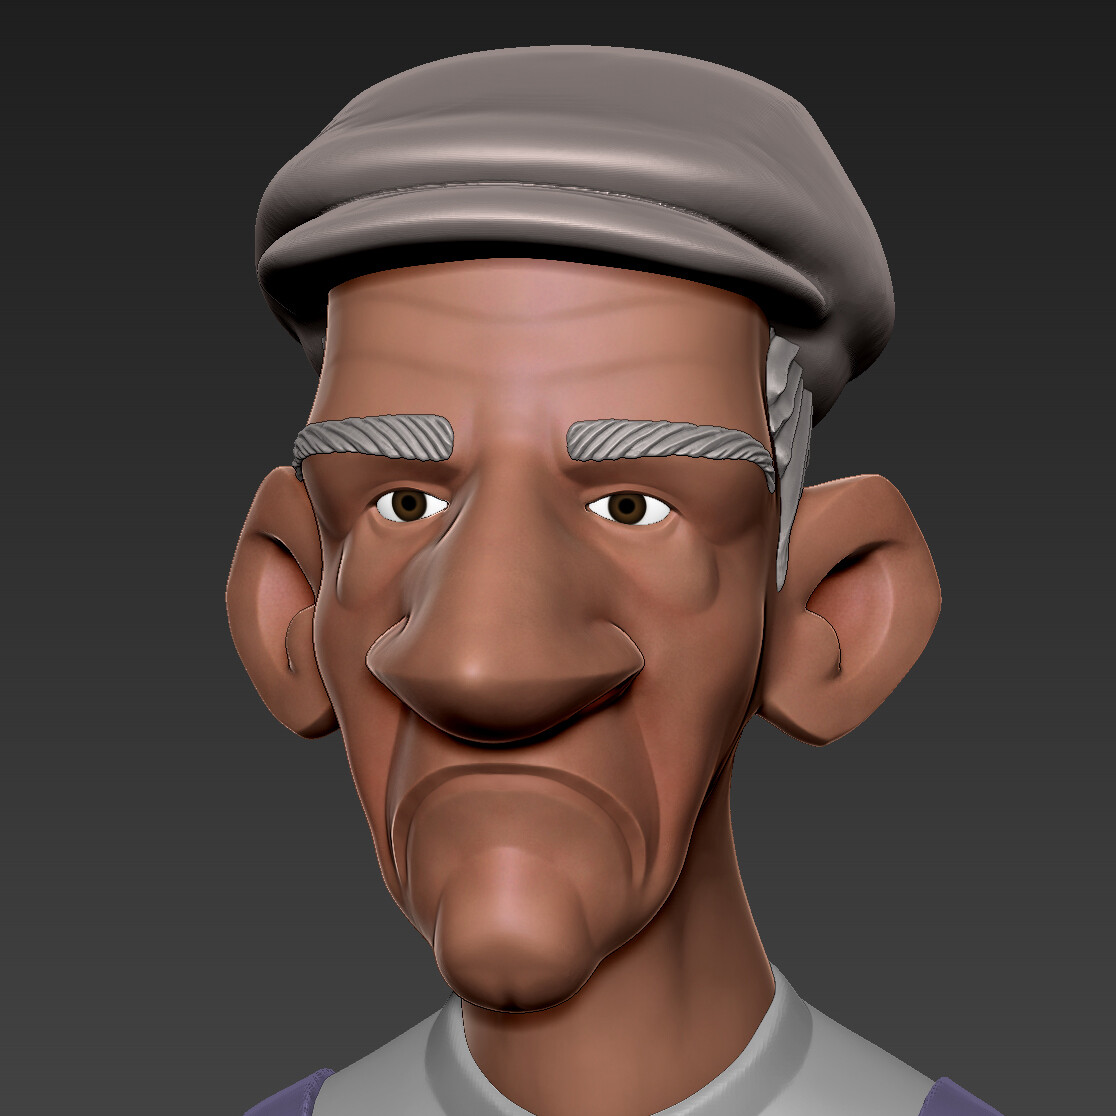 ArtStation - Stylized 3D Character Old Man